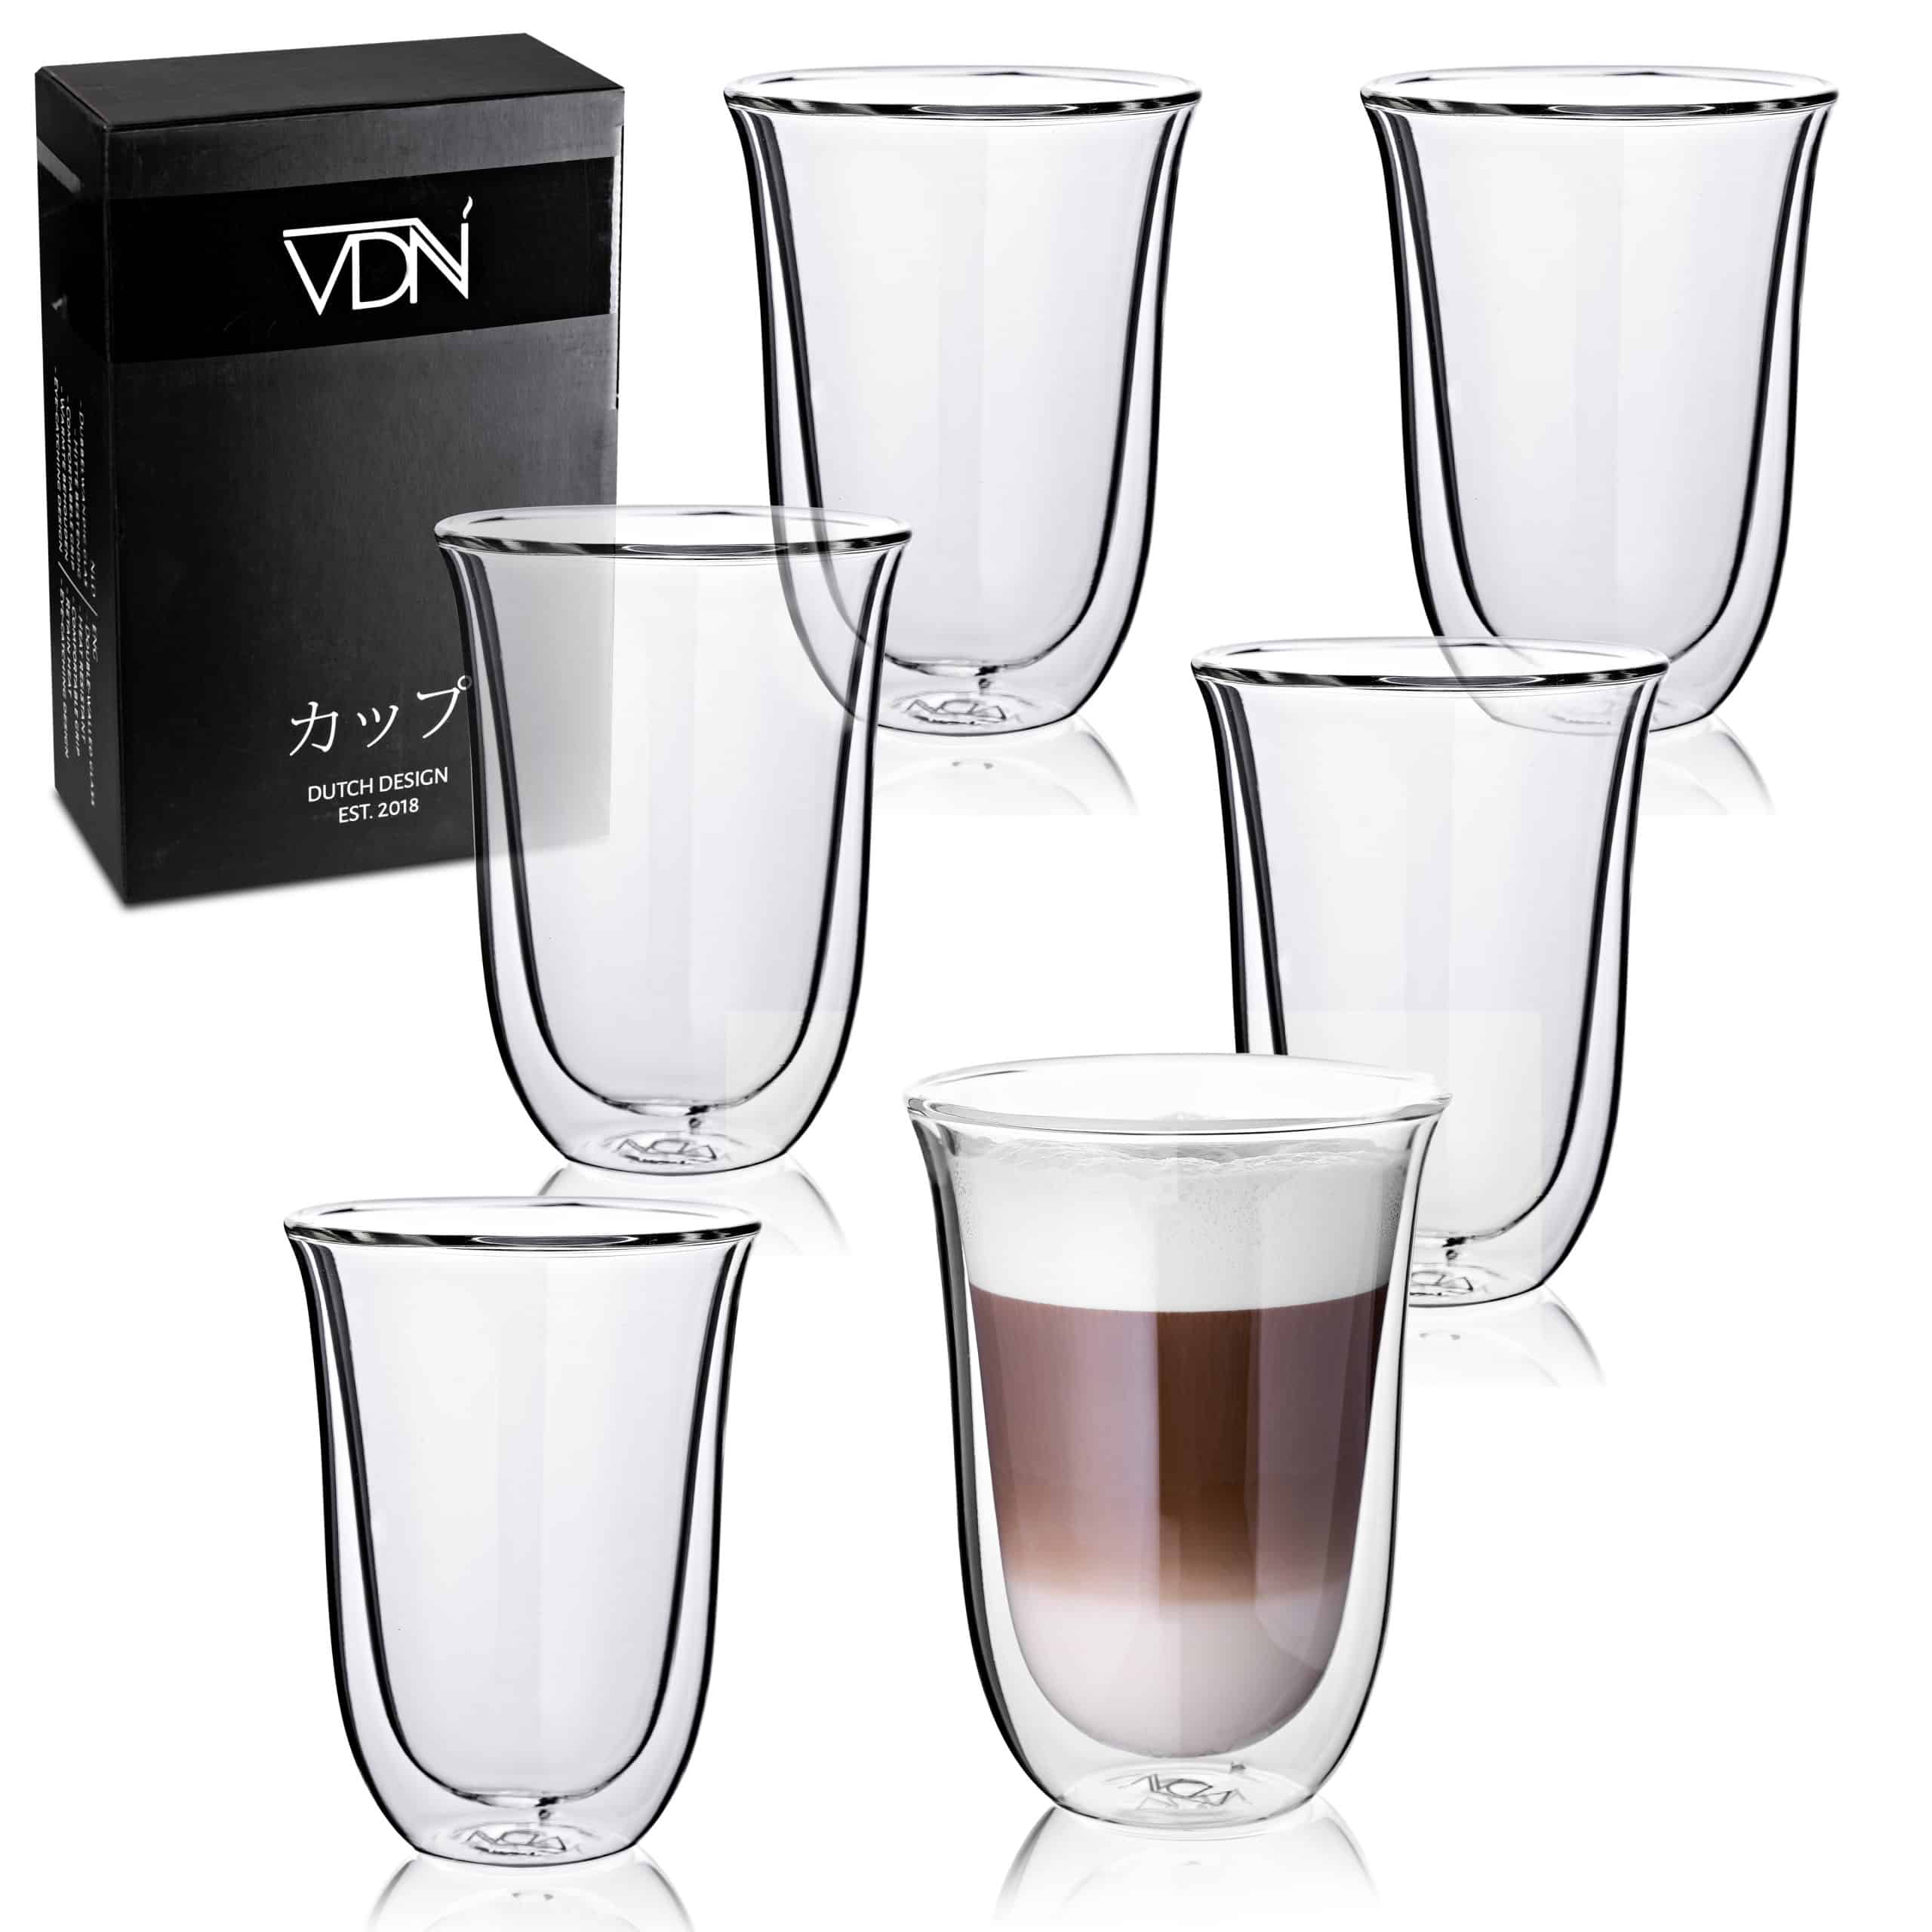 optellen op gang brengen Net zo Dubbelwandige glazen latte macchiato - 300 ML - Set van 6 - VDN